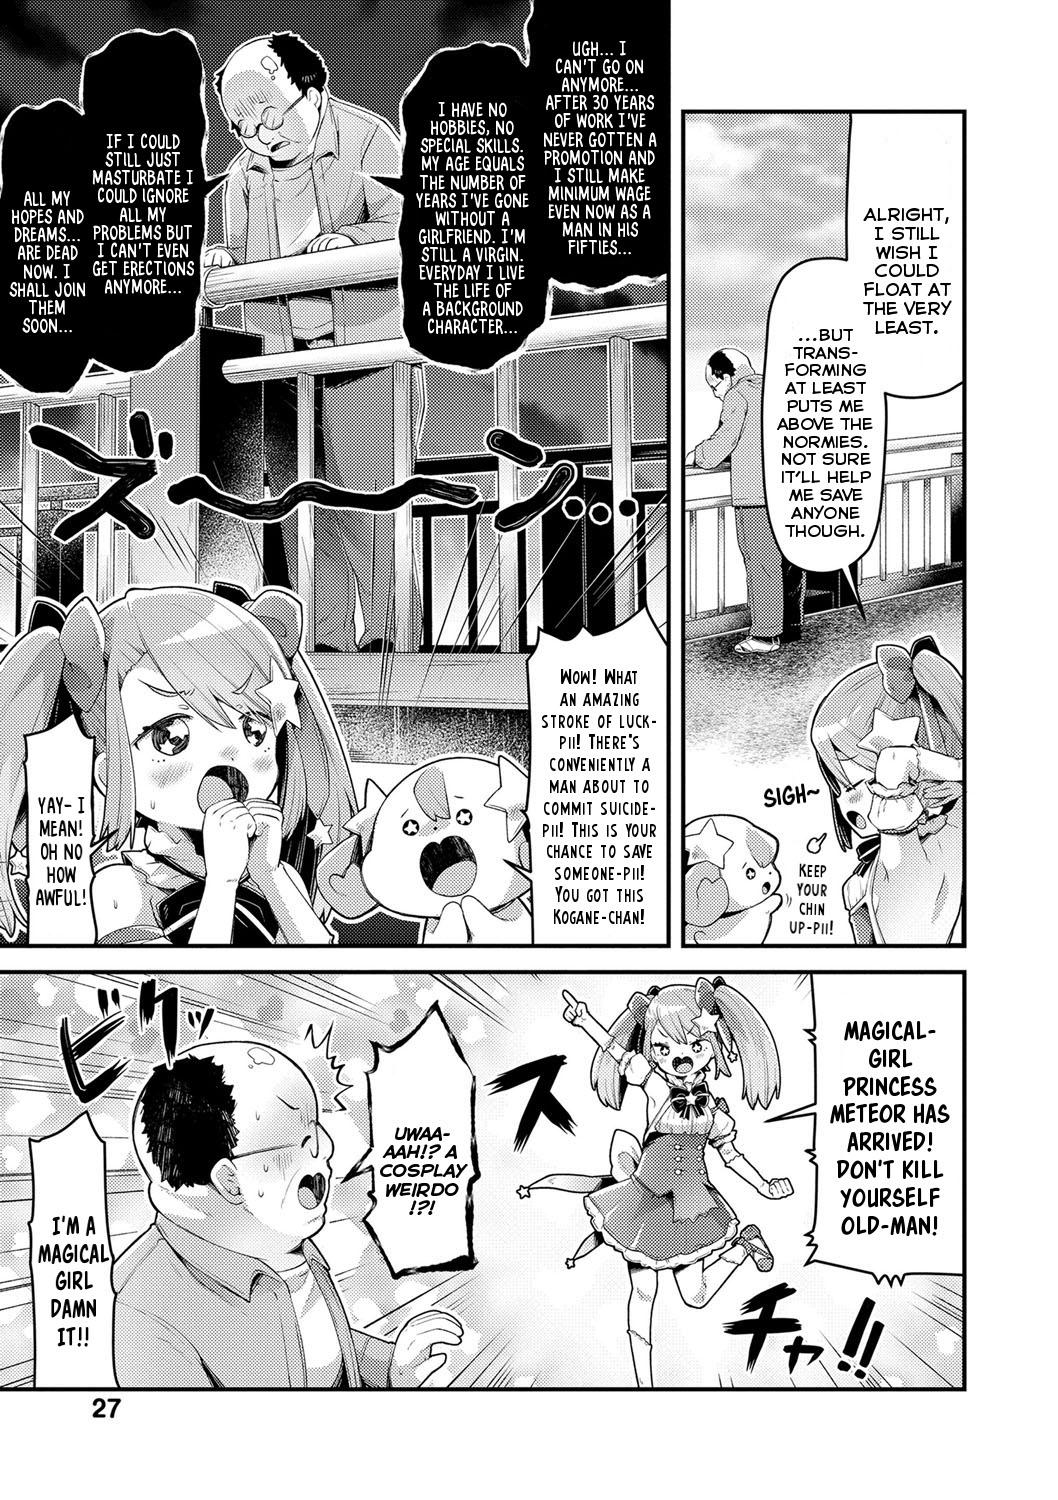 Bush Mahou Shoujo Princess Meteor Kanashimi kara Sukue! Ai no Kiseki! | Magical-Girl Princess Meteor Will Save Everyone From Sadness! With the Miracle of Love! High - Page 3